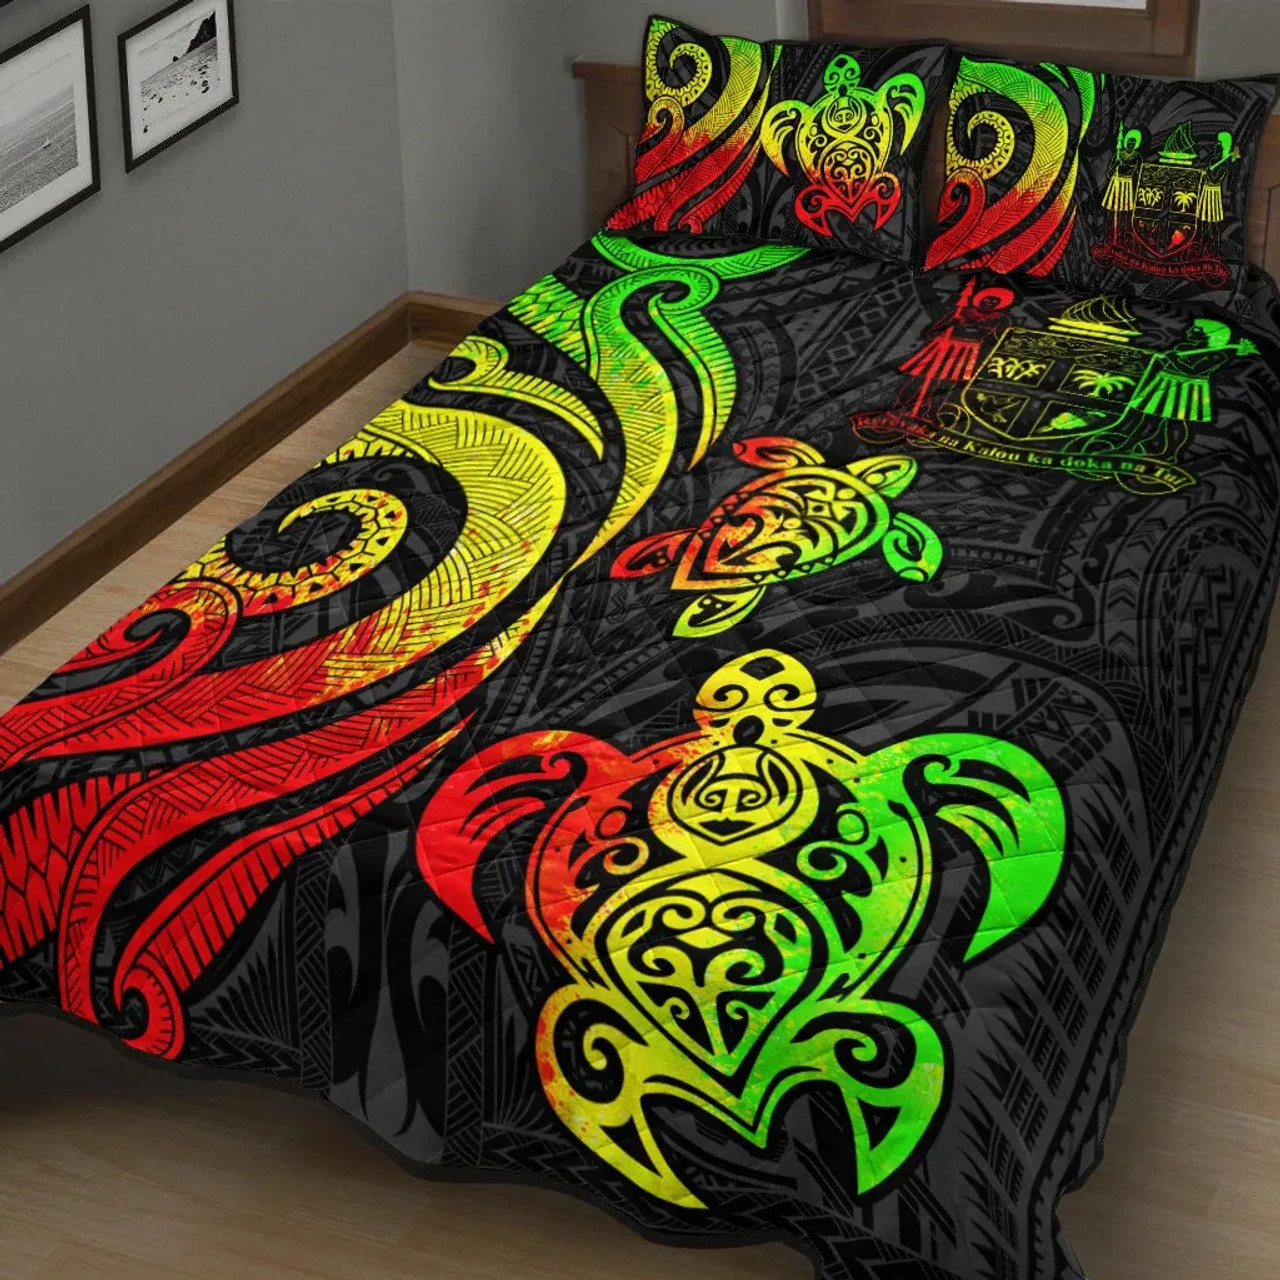 Fiji Quilt Bed Set - Reggae Tentacle Turtle Crest 3